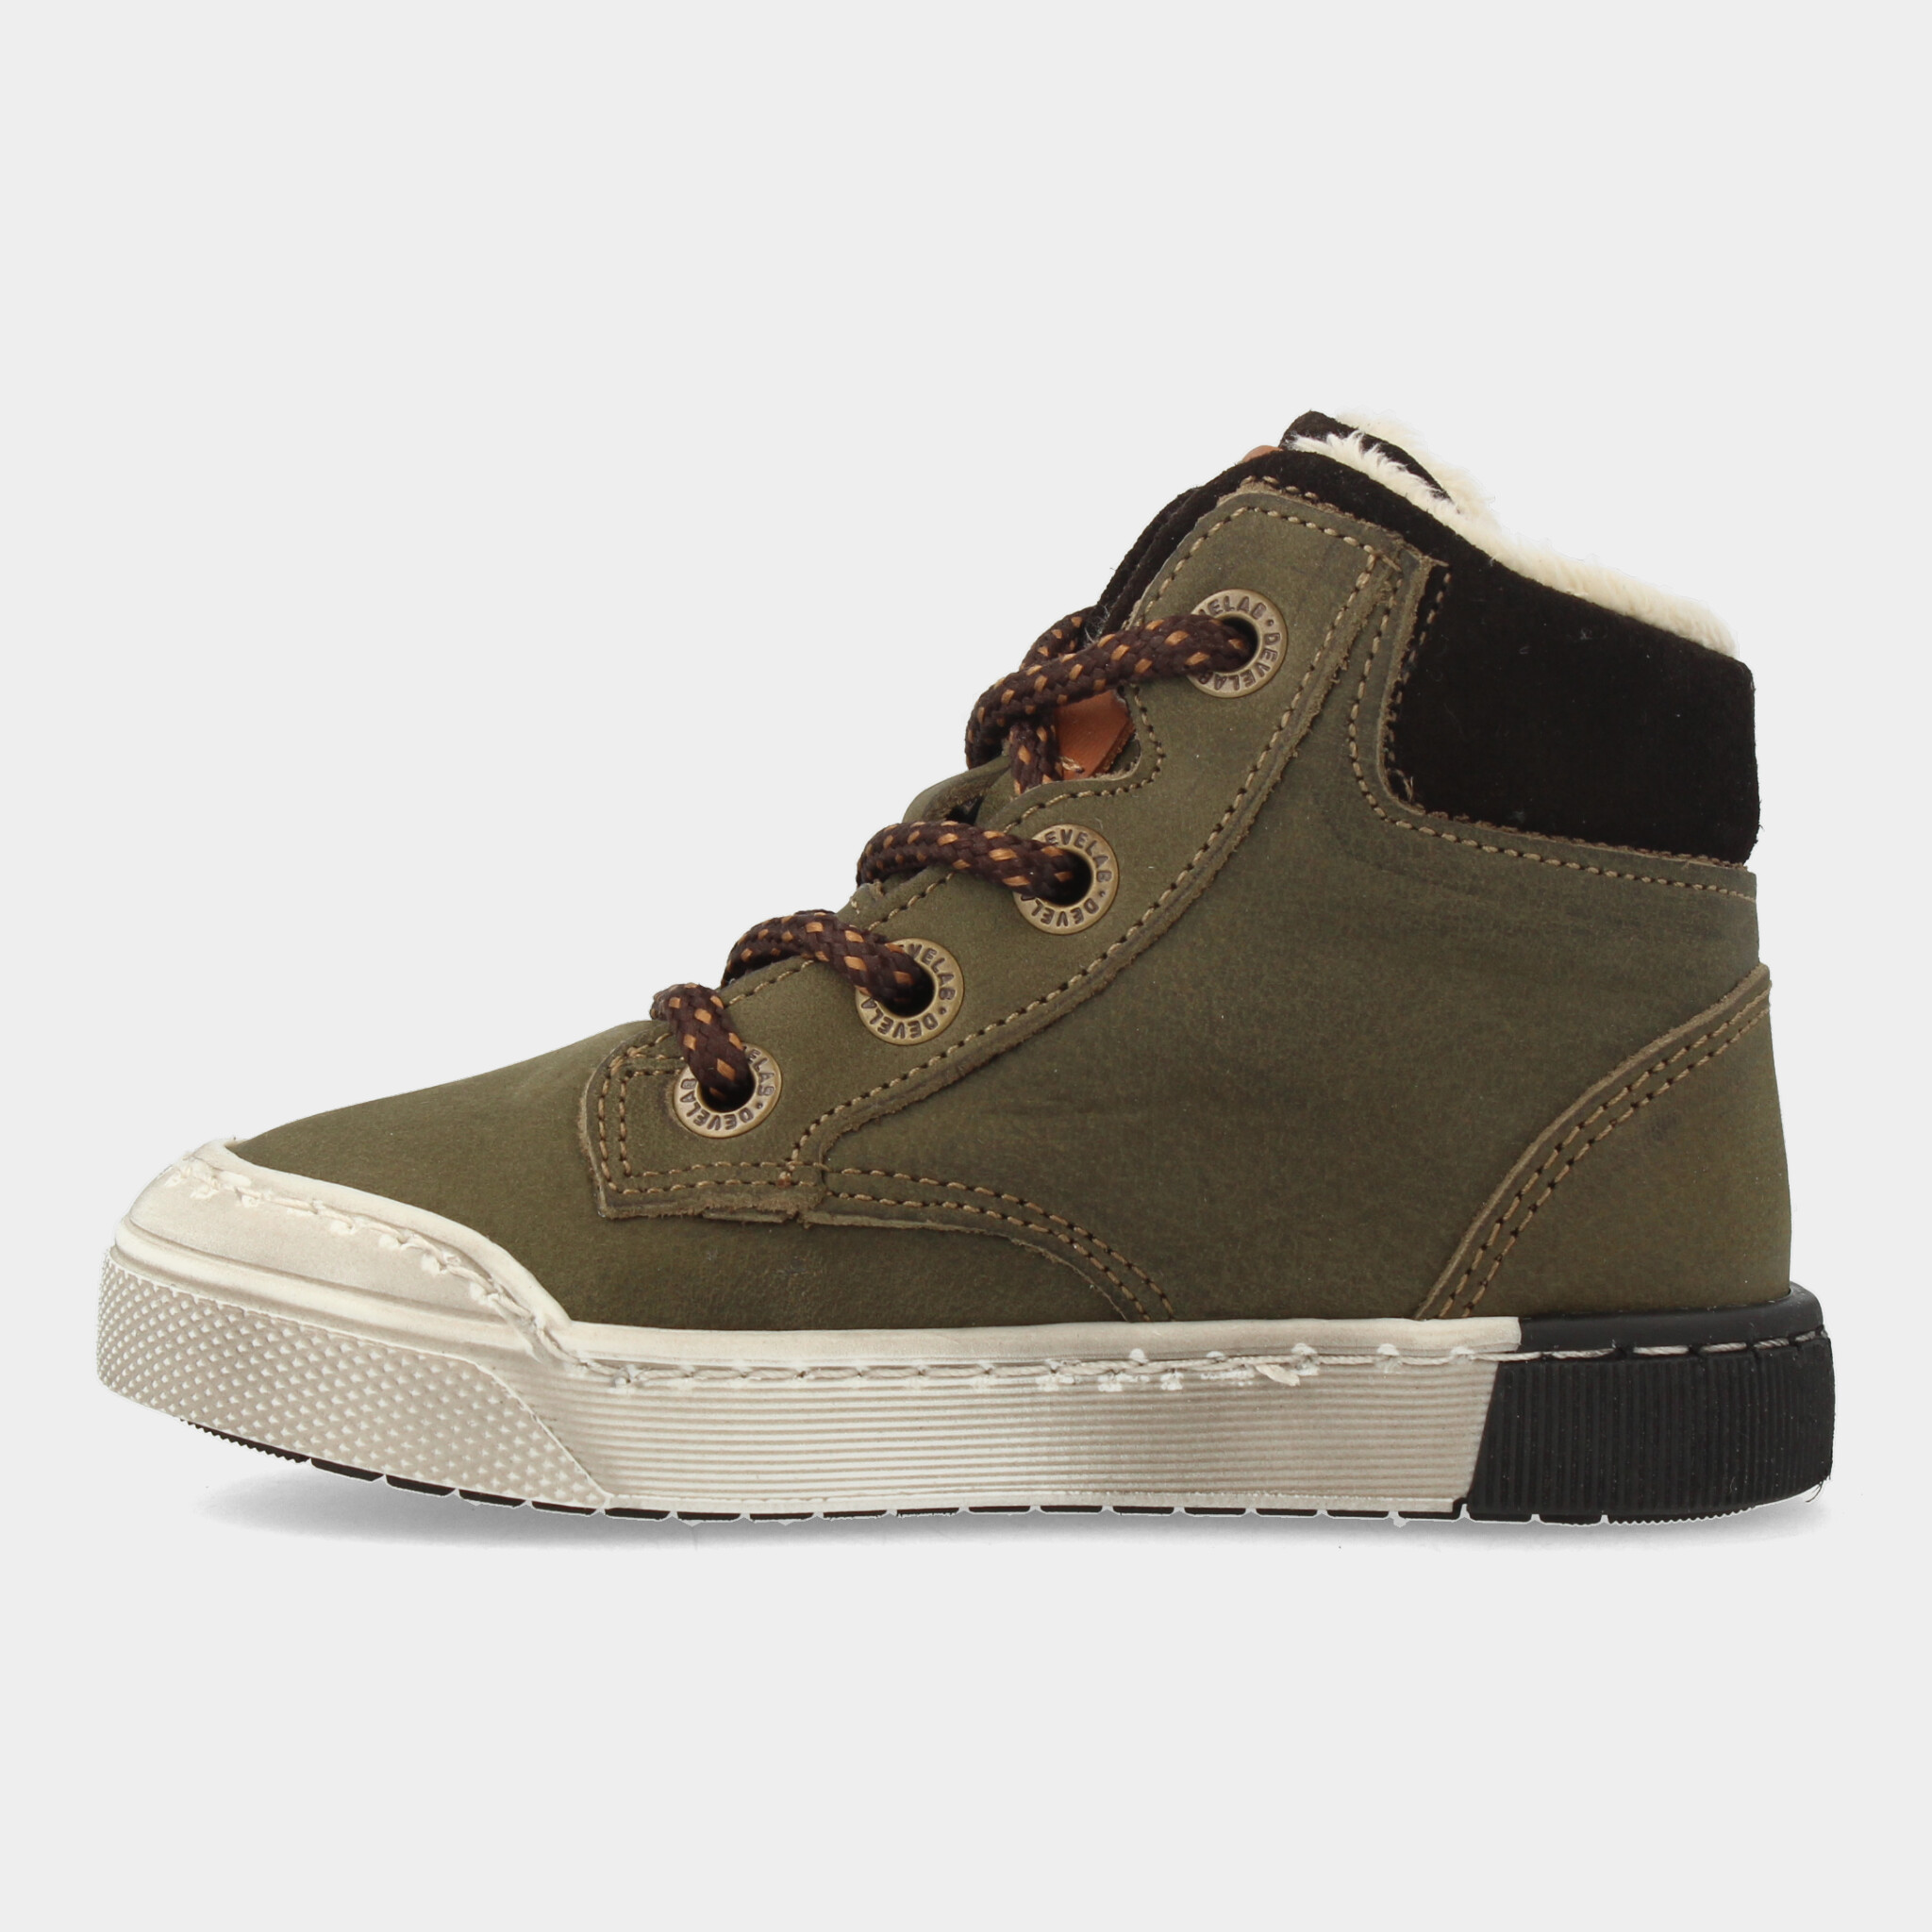 Hoge Groene Sneakers | Develab 46163